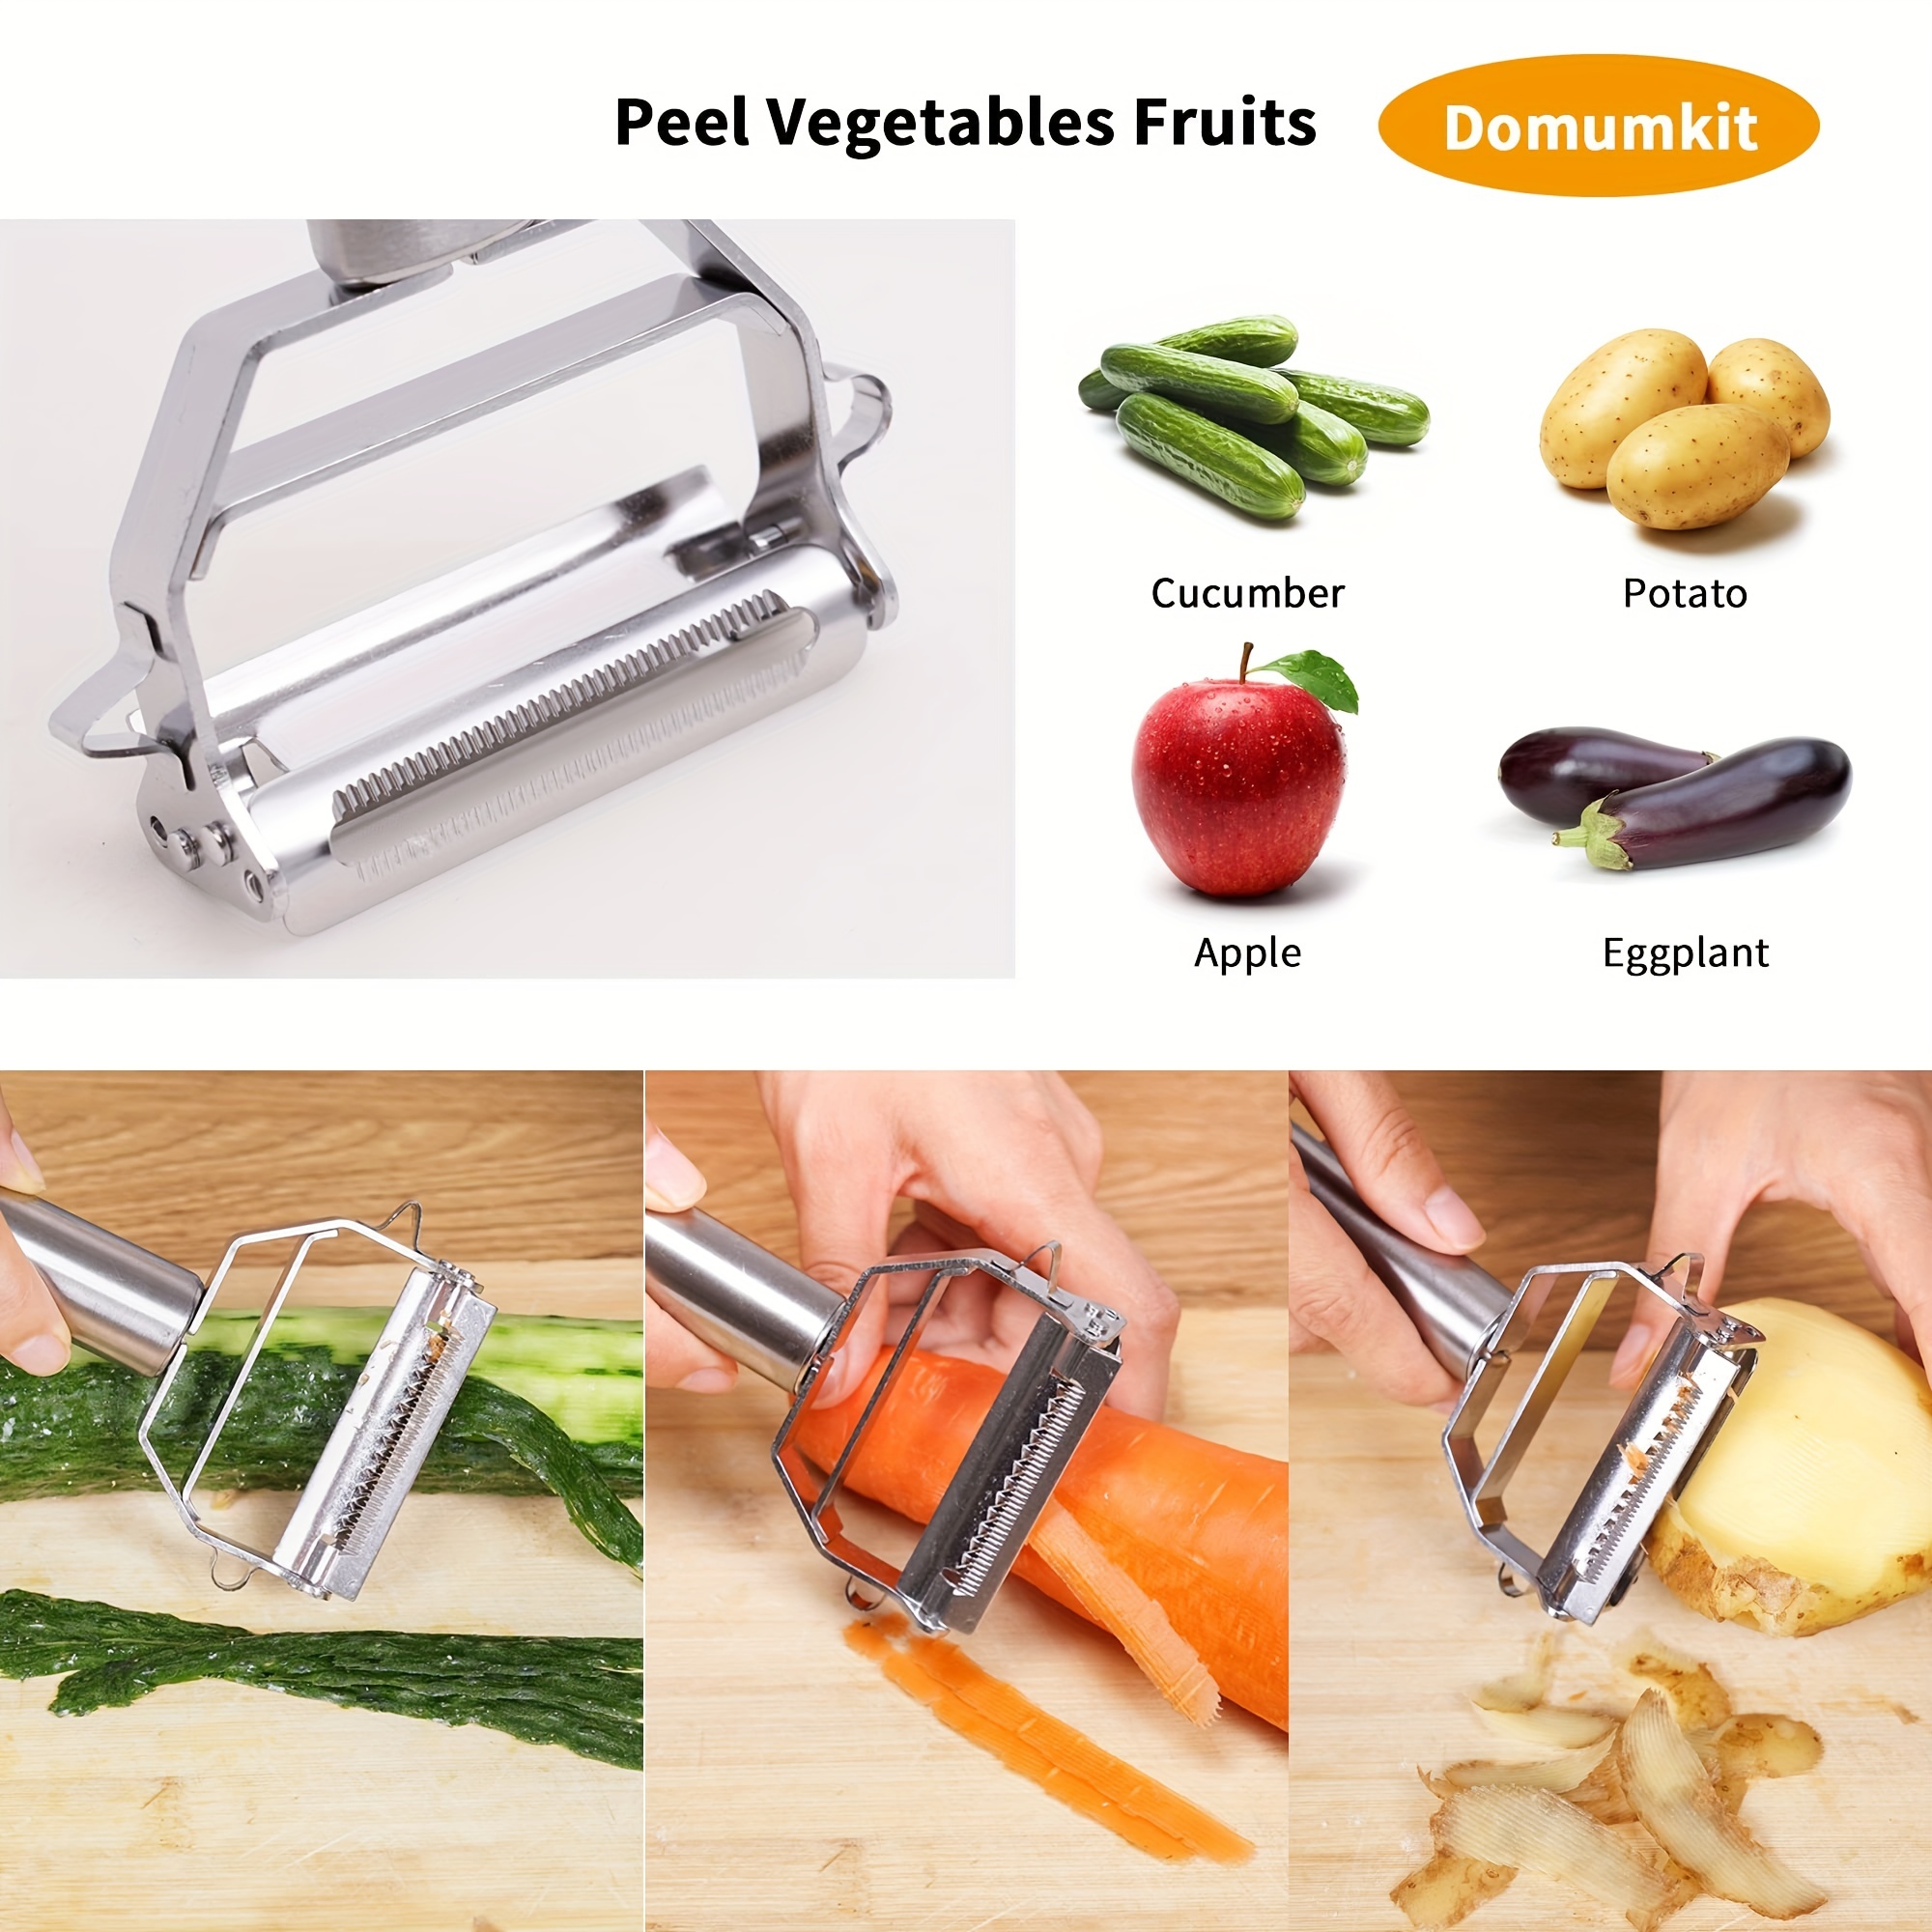 Stainless Steel Dual Blade Vegetable Peeler - Commercial Grade Julienne  Cutter, Slicer, Shredder, Scraper - Fruit, Potatoes, Carrot, Cucumber 